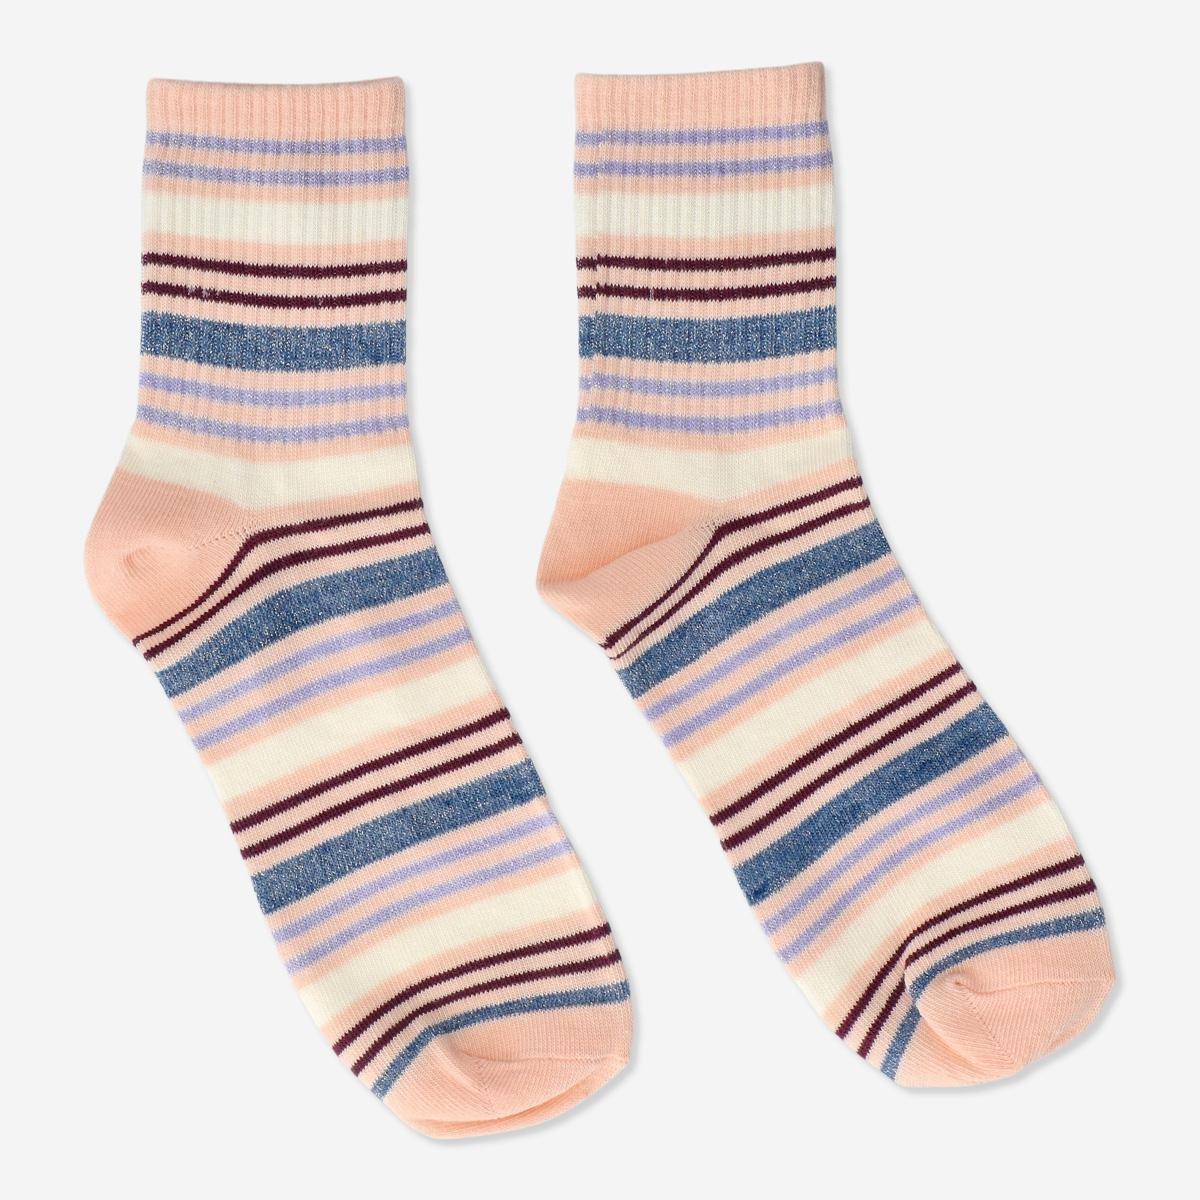 Multicolour socks. 36-38